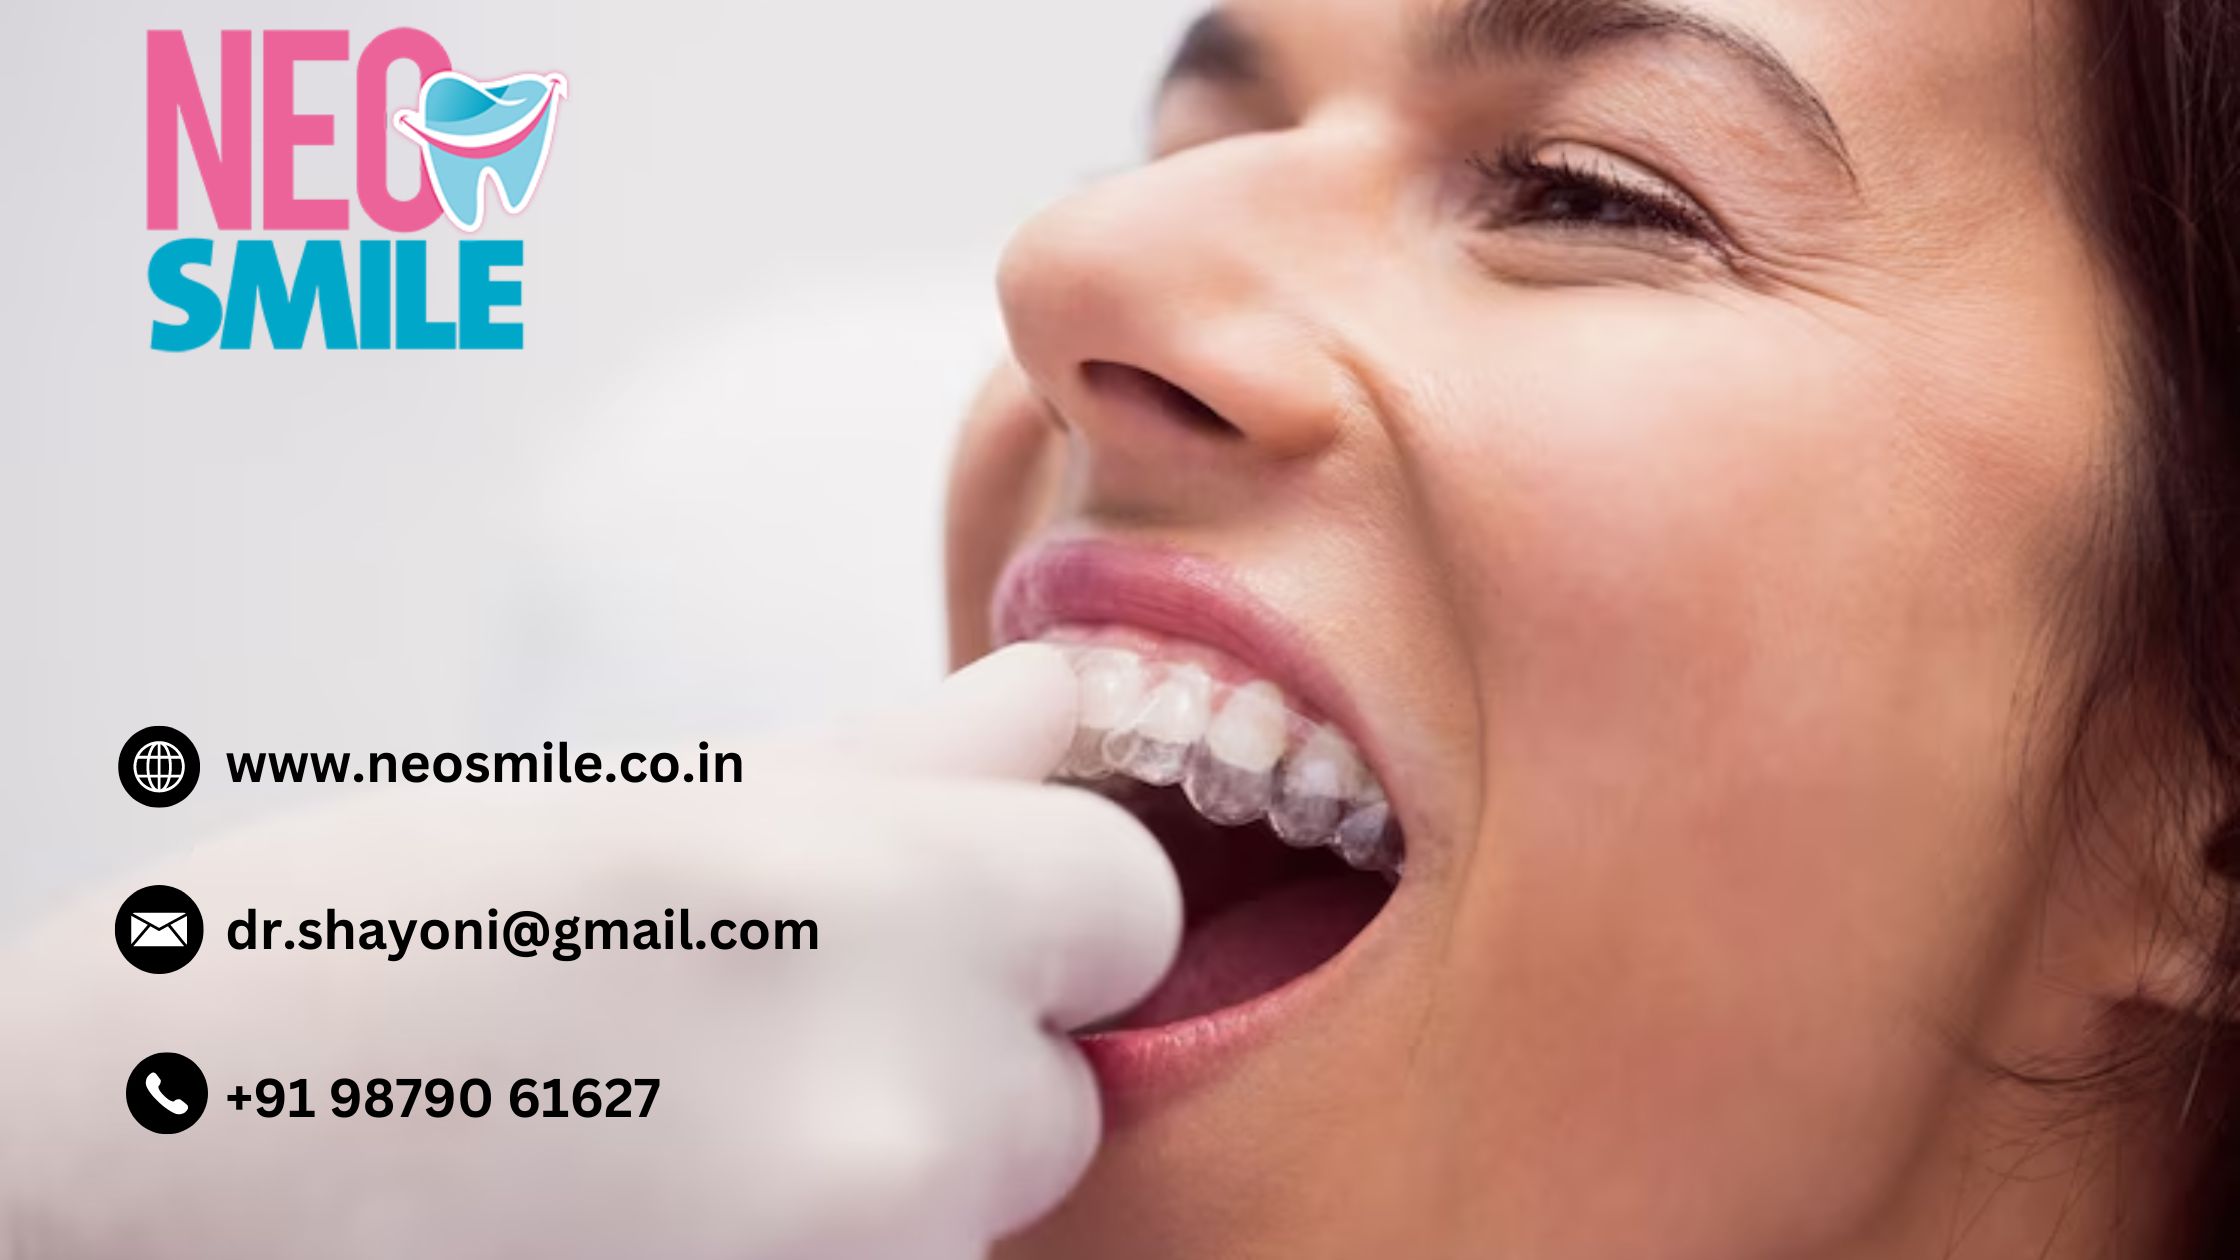 best dental Invisalign treatment in India